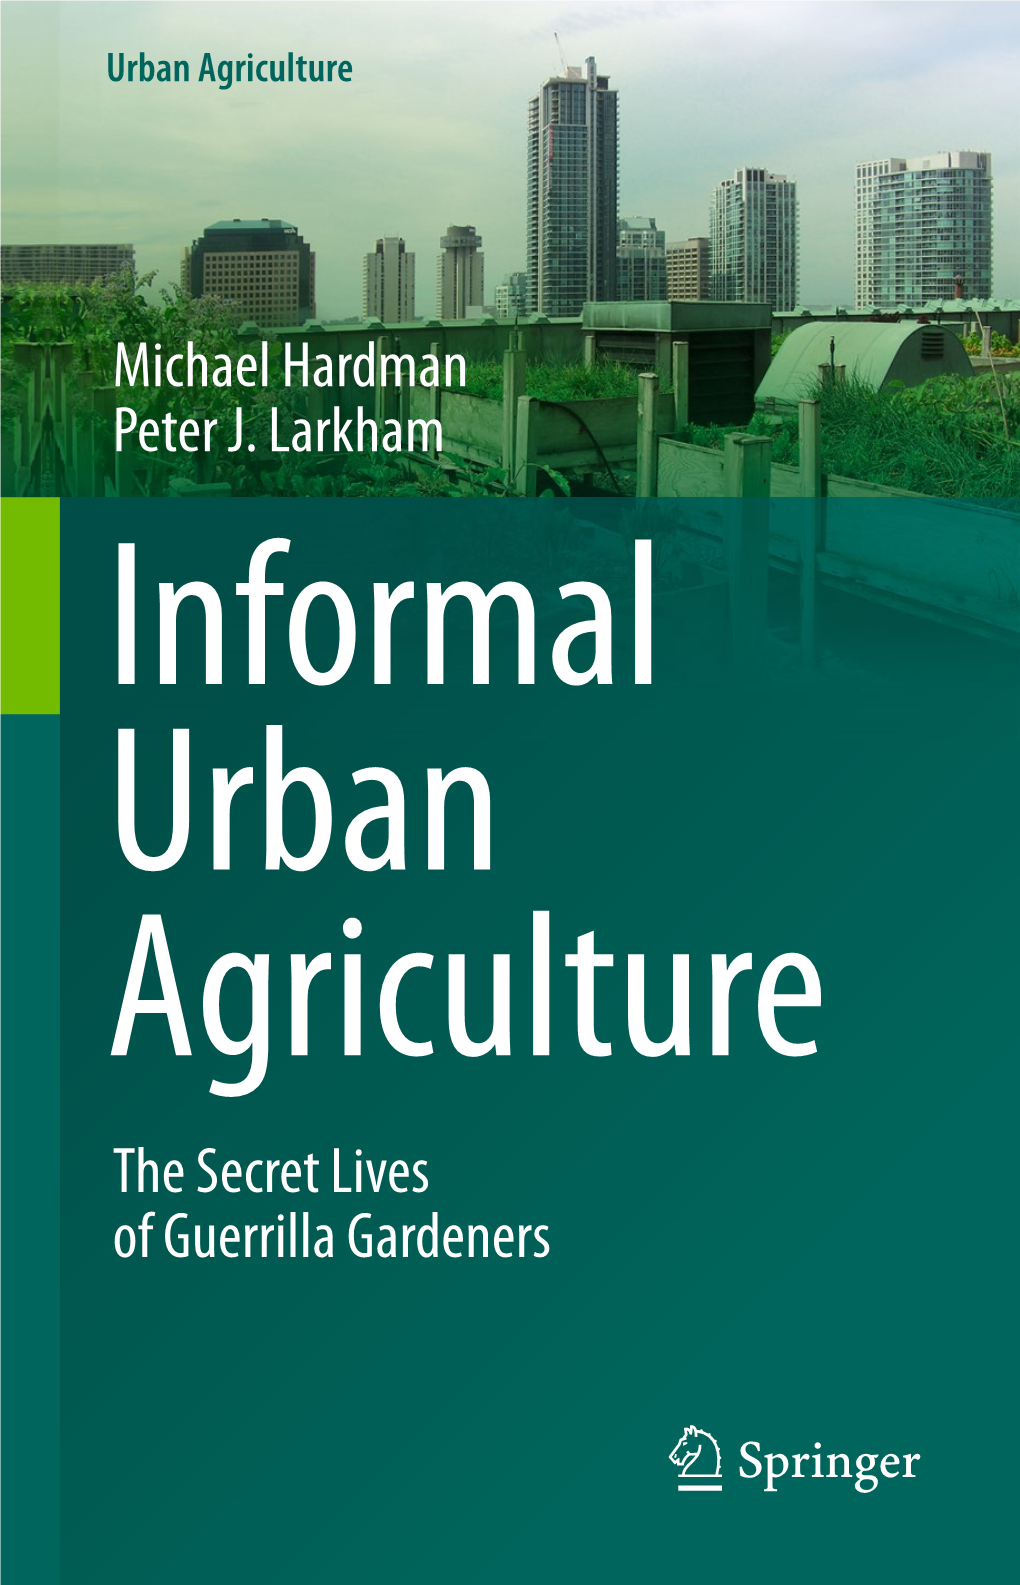 Michael Hardman Peter J. Larkham the Secret Lives of Guerrilla